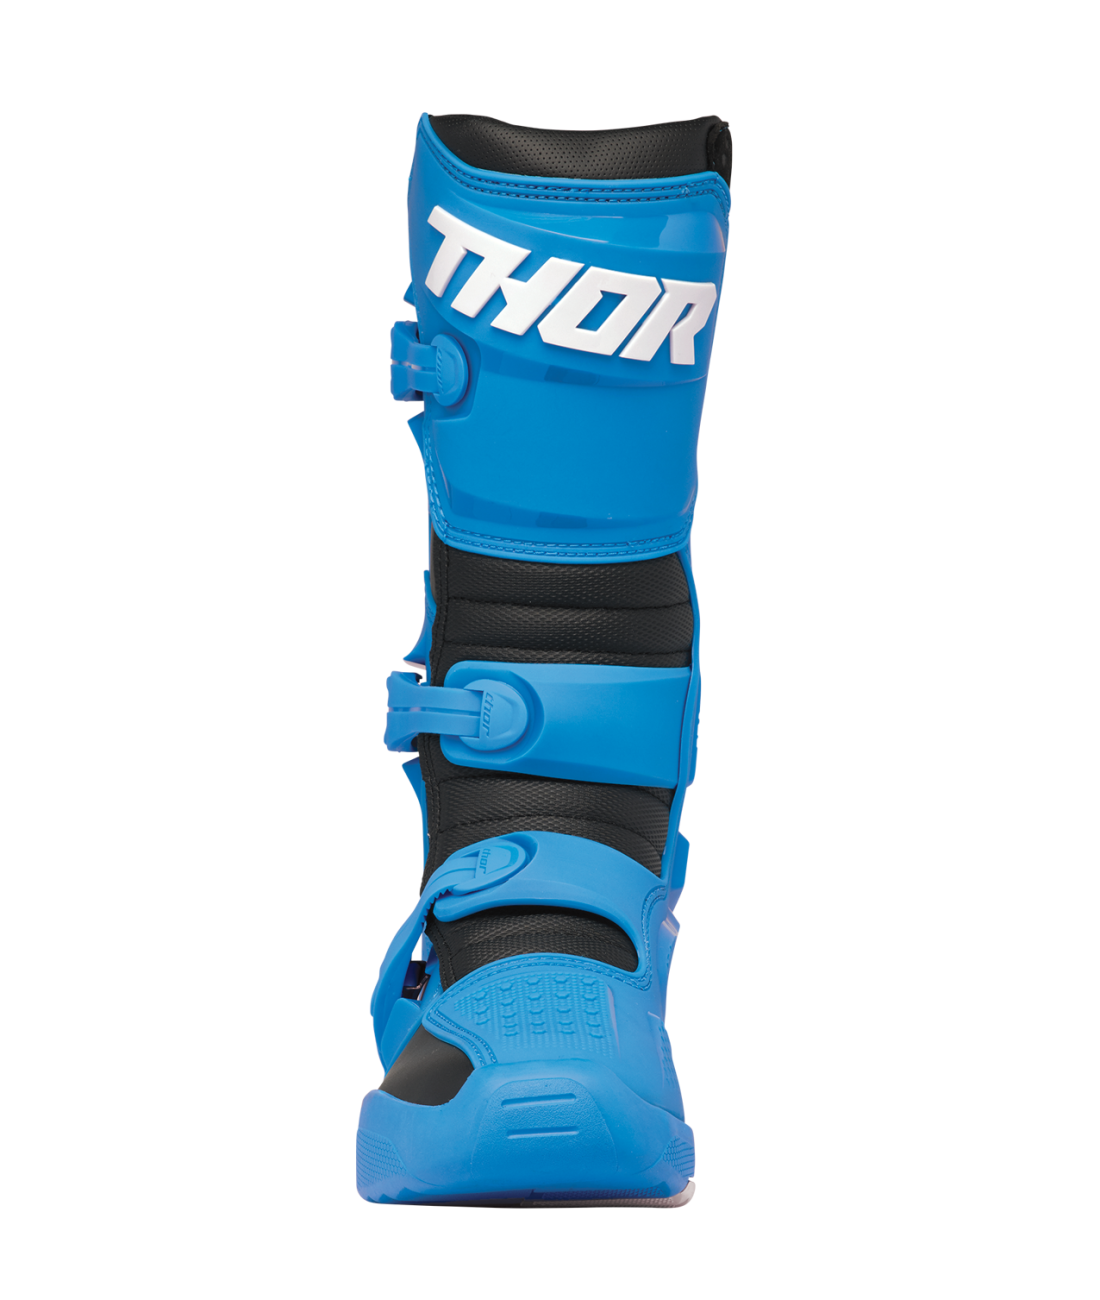 Thor Blitz XR Adult Motocross Boots - Blue/Black